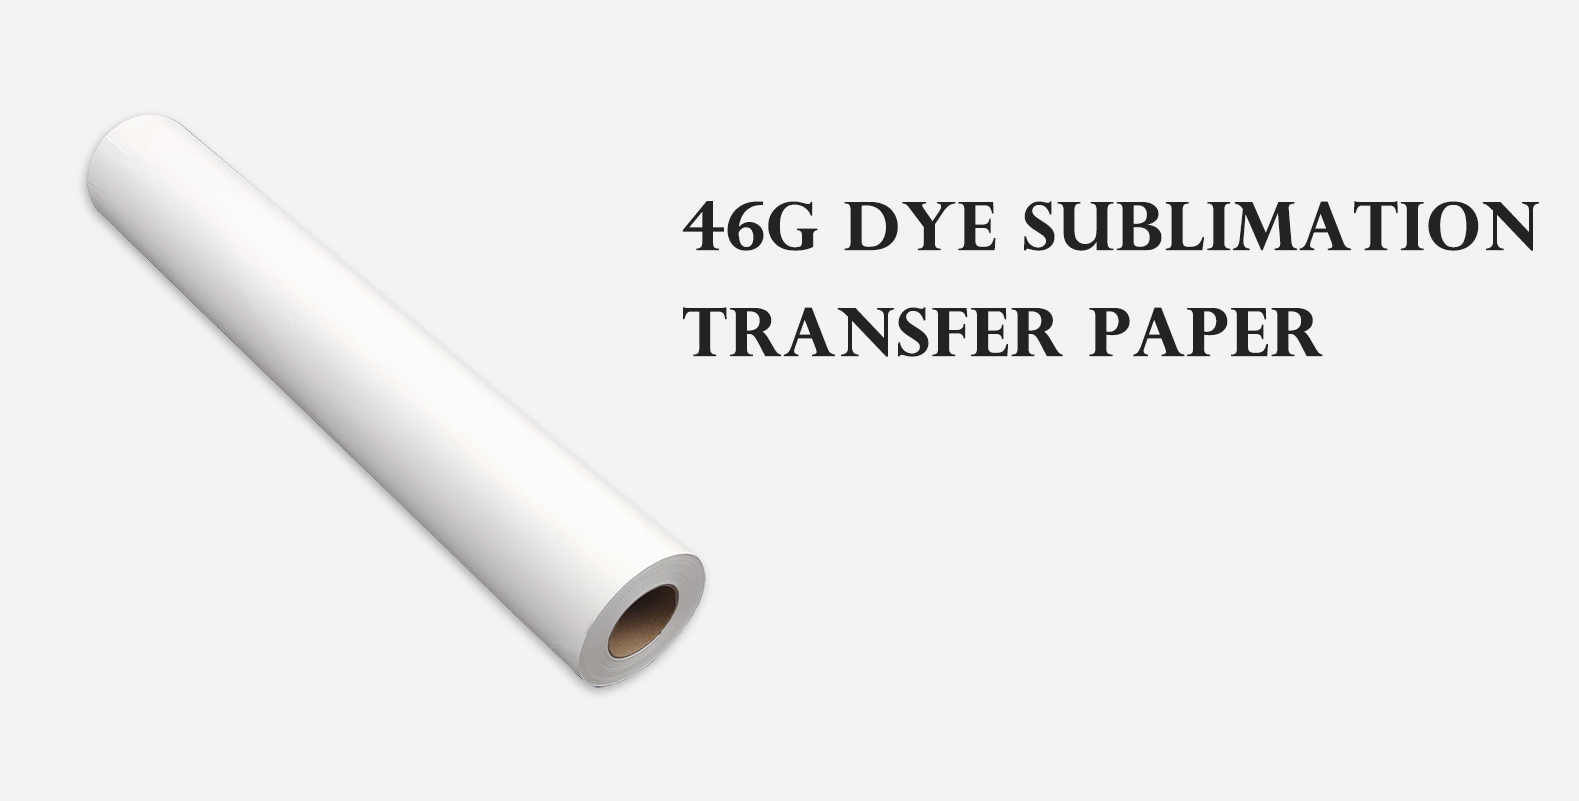 46g dye sublimation transfer paper